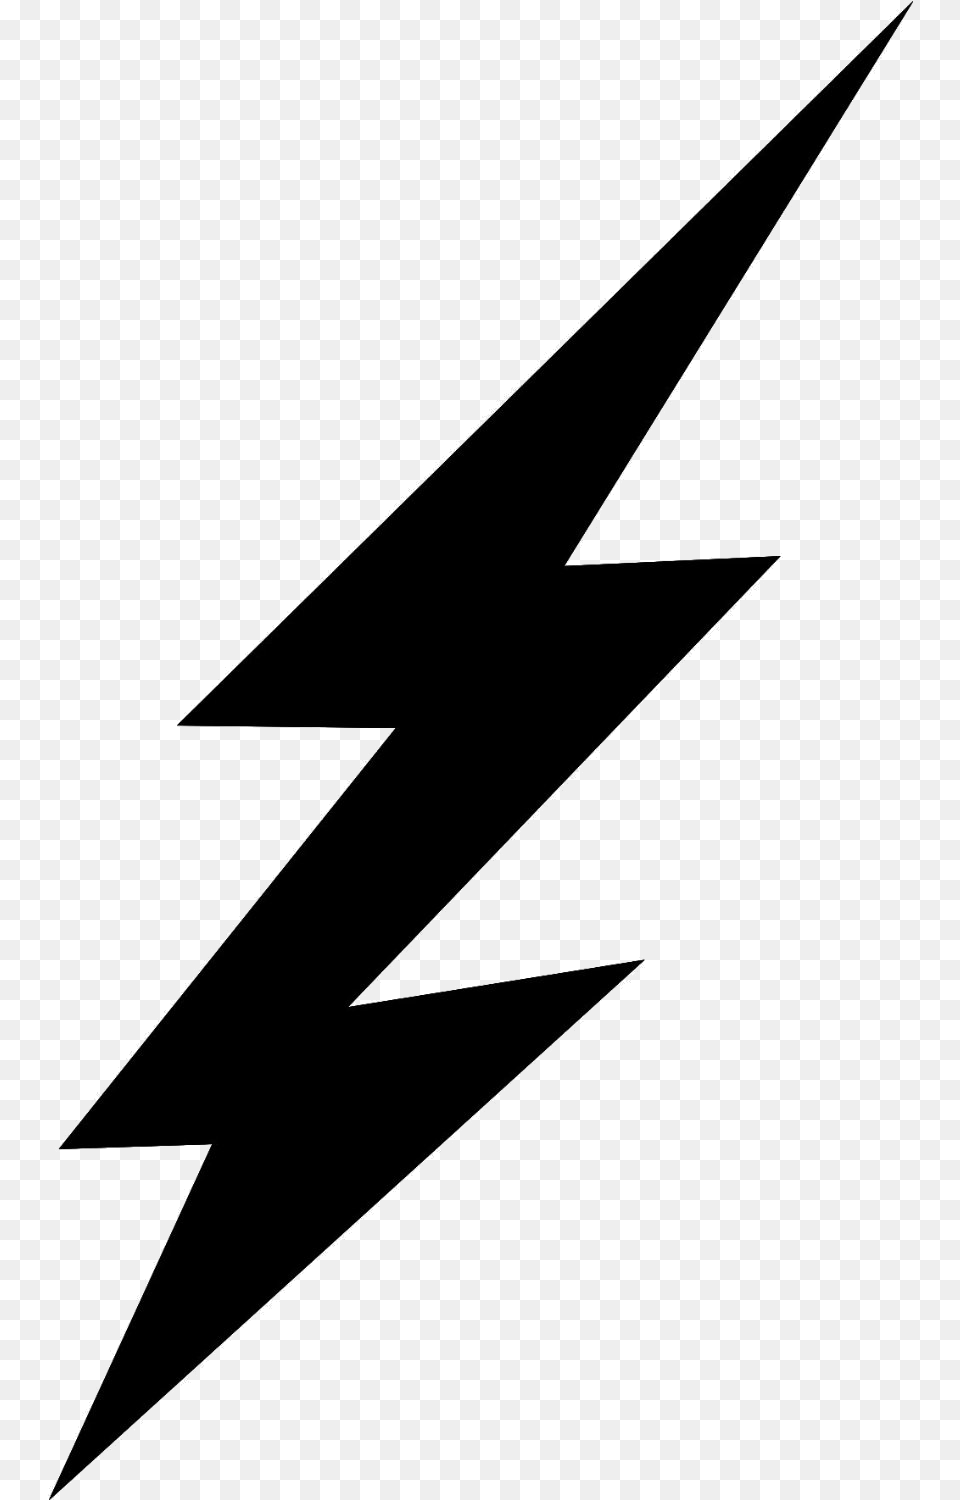 Lightning Bolt Clip Art On Transparent Lightning Bolt Clipart, Triangle, Bow, Weapon, Star Symbol Png Image